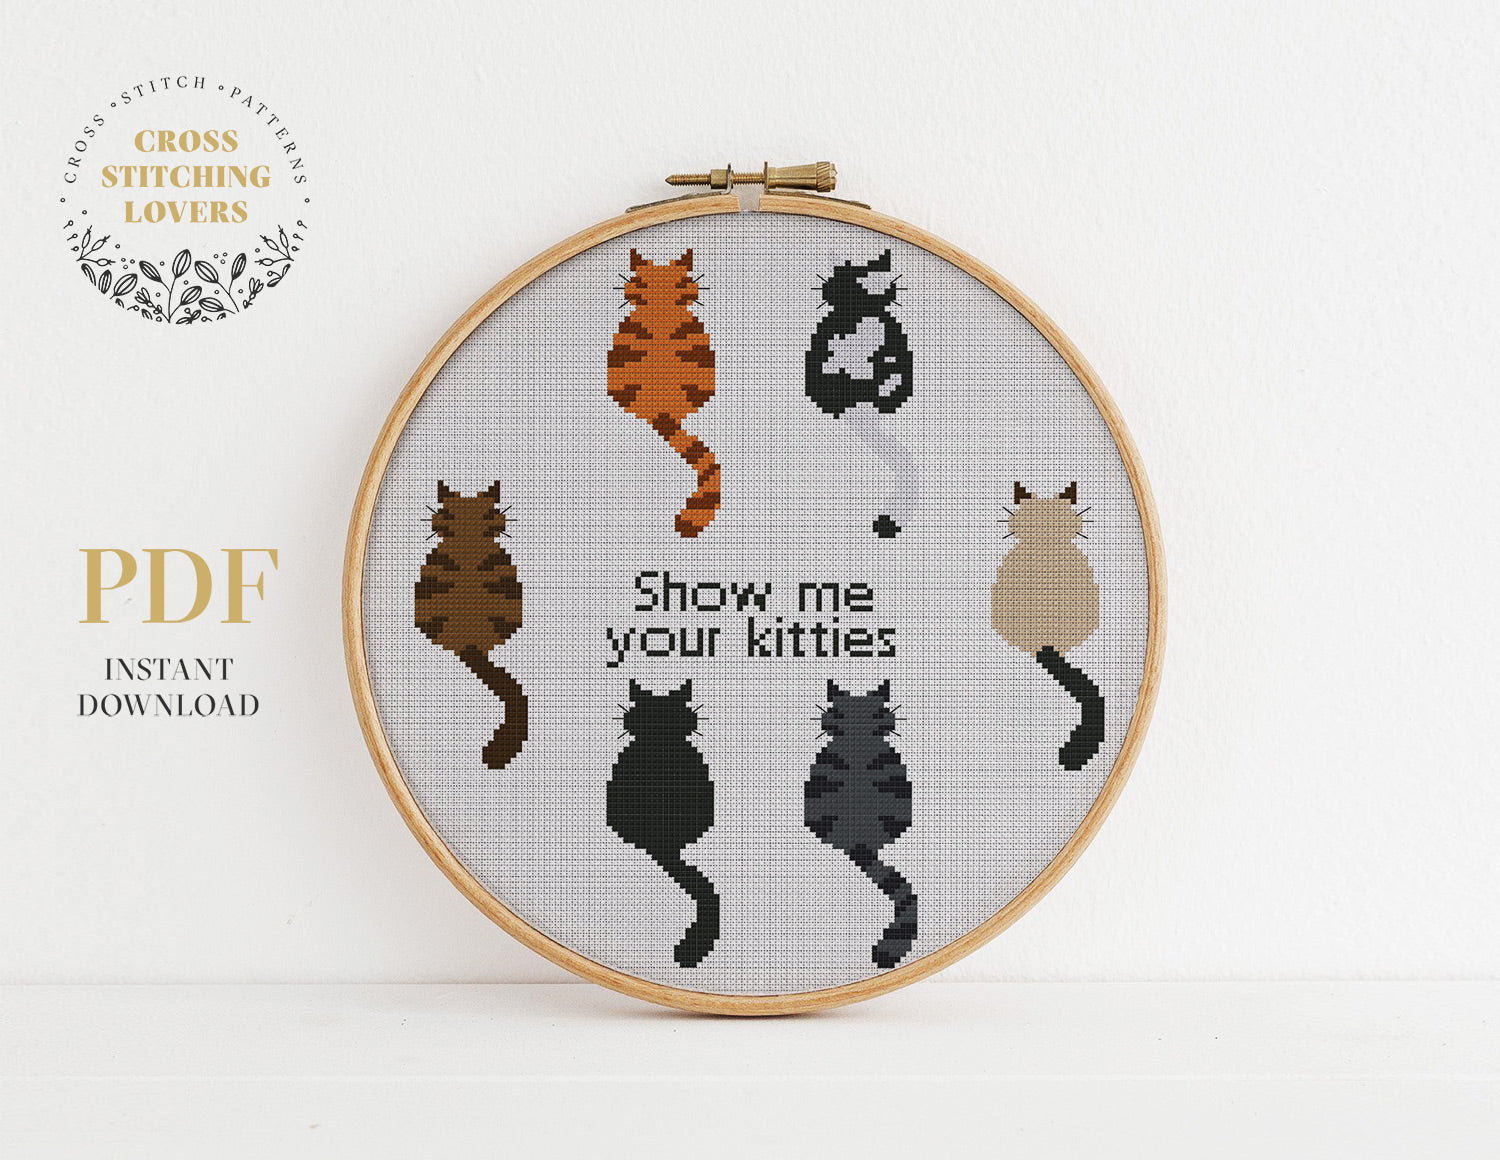 Show me your kitties - Cross stitch pattern